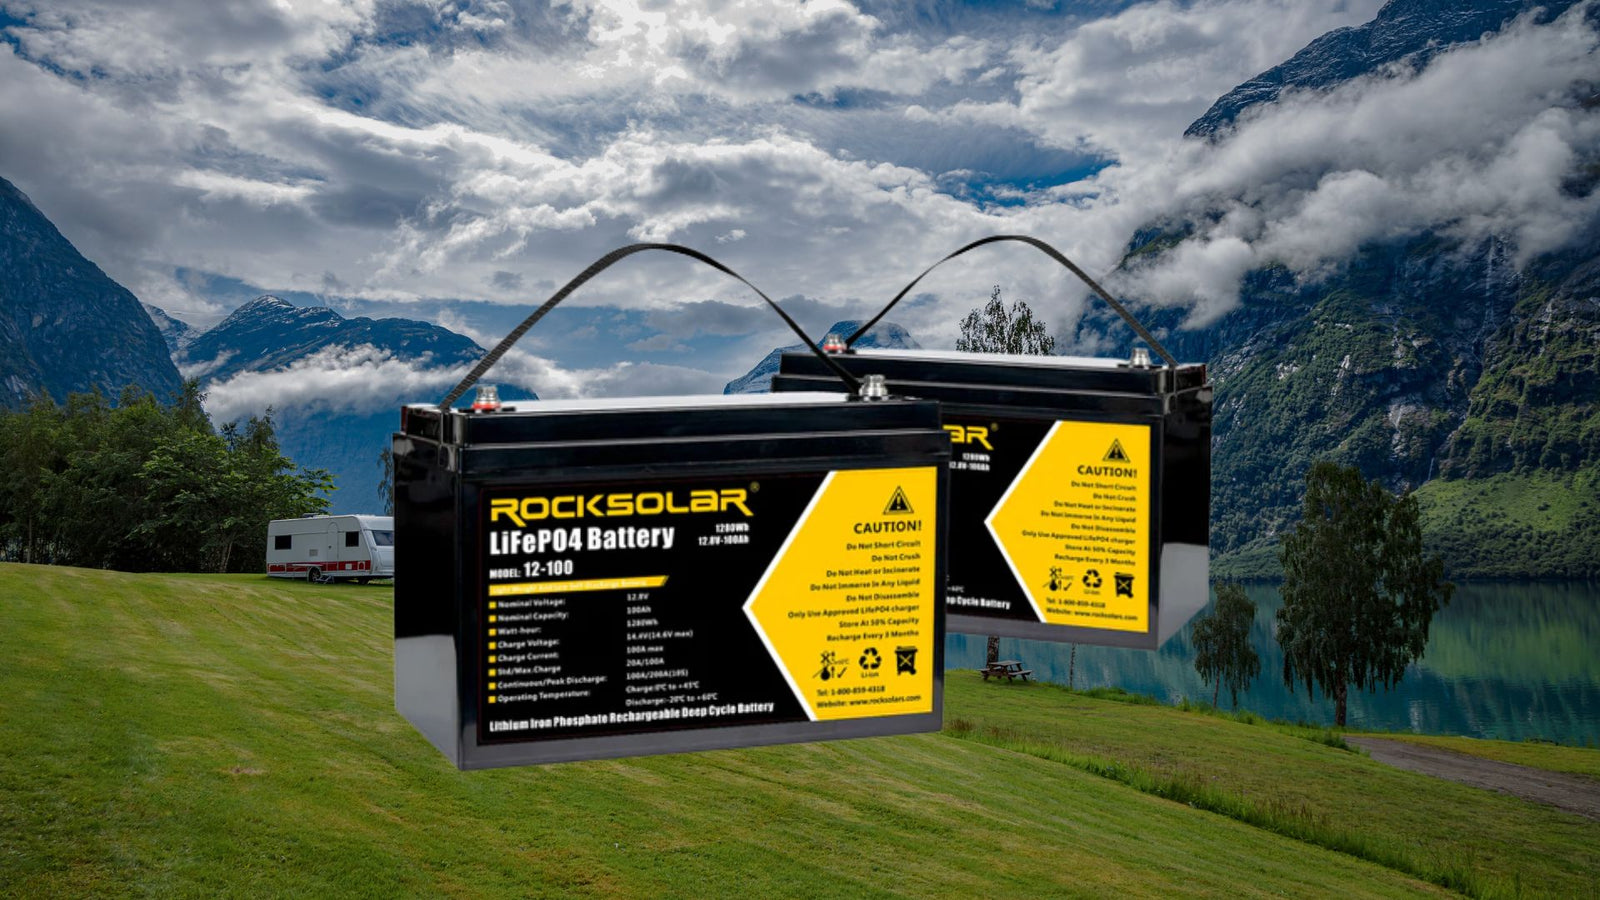 Rocksolar's LiFePO4 Batteries: An Upper Hand Over Lead Acid Batteries